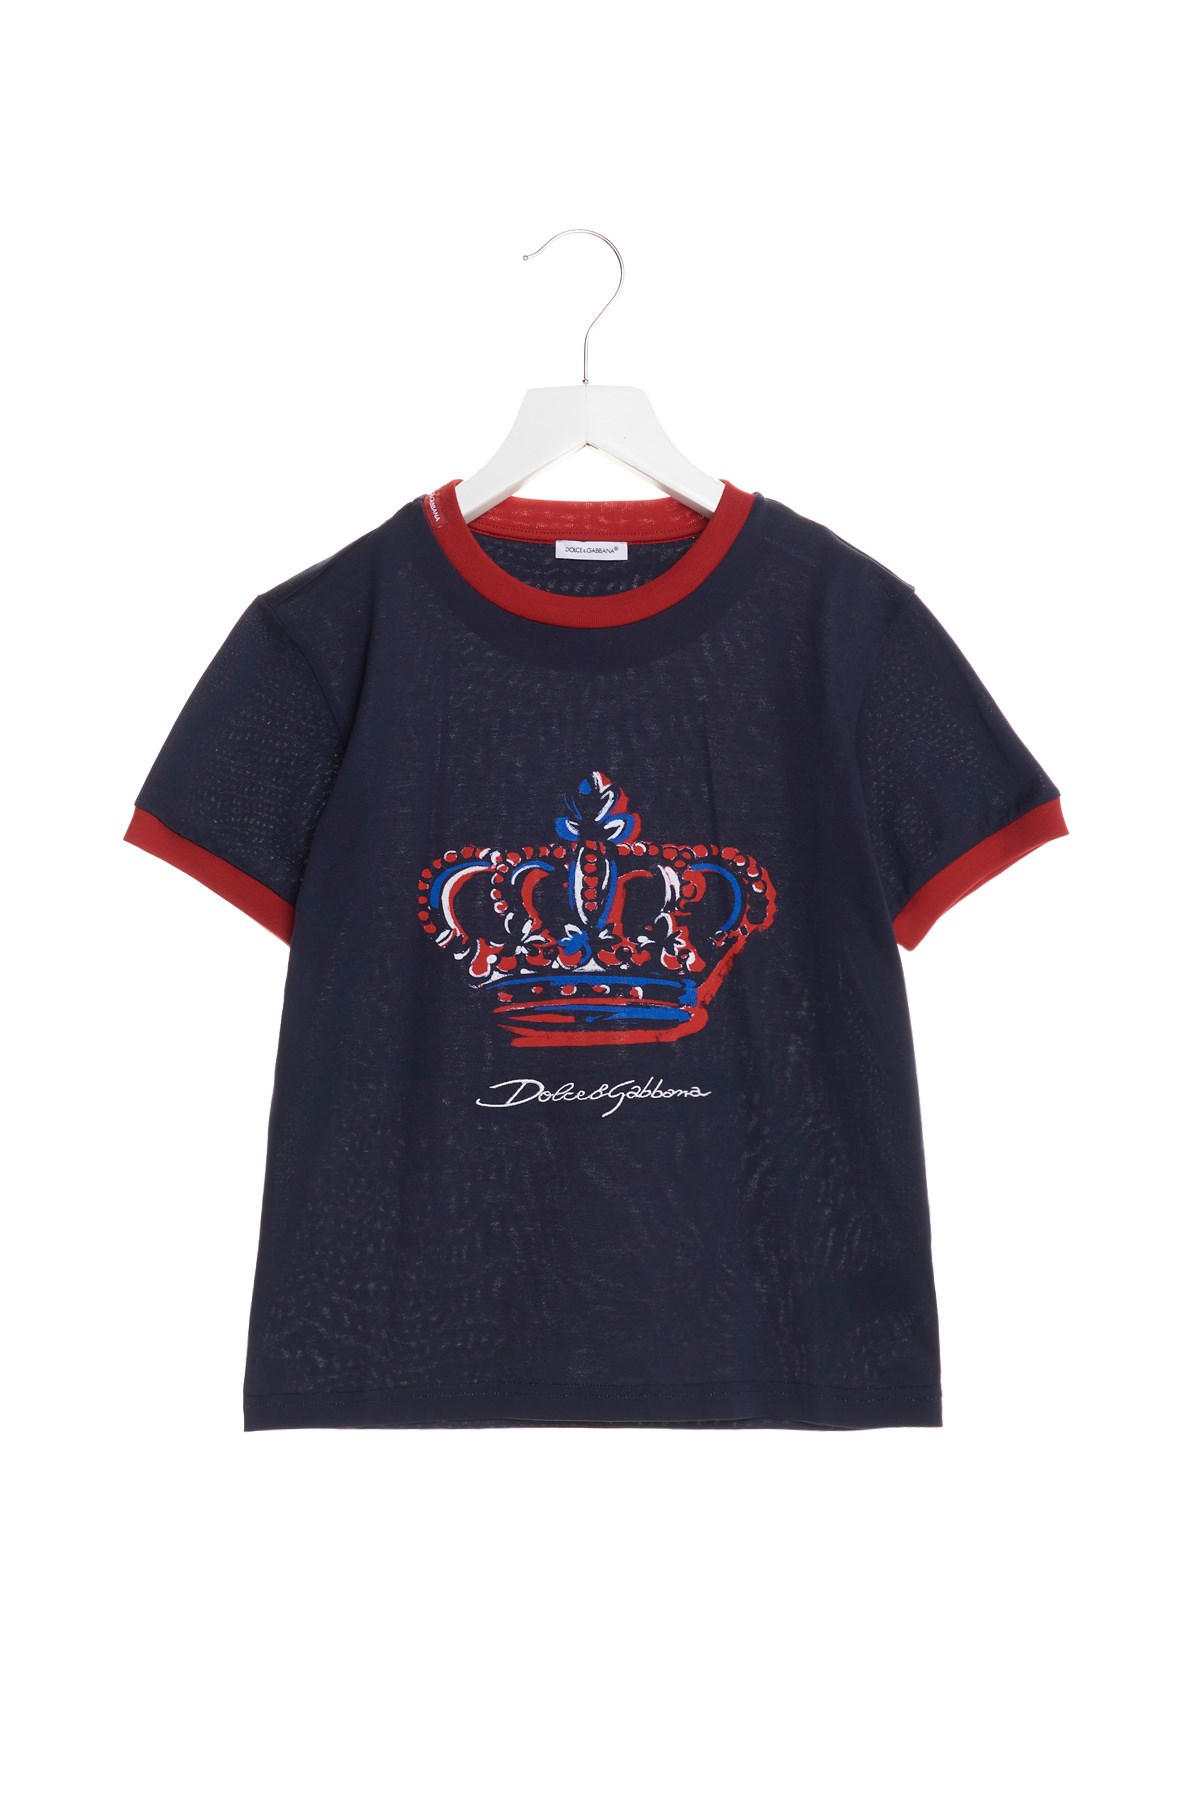 DOLCE & GABBANA Crown Print T-Shirt